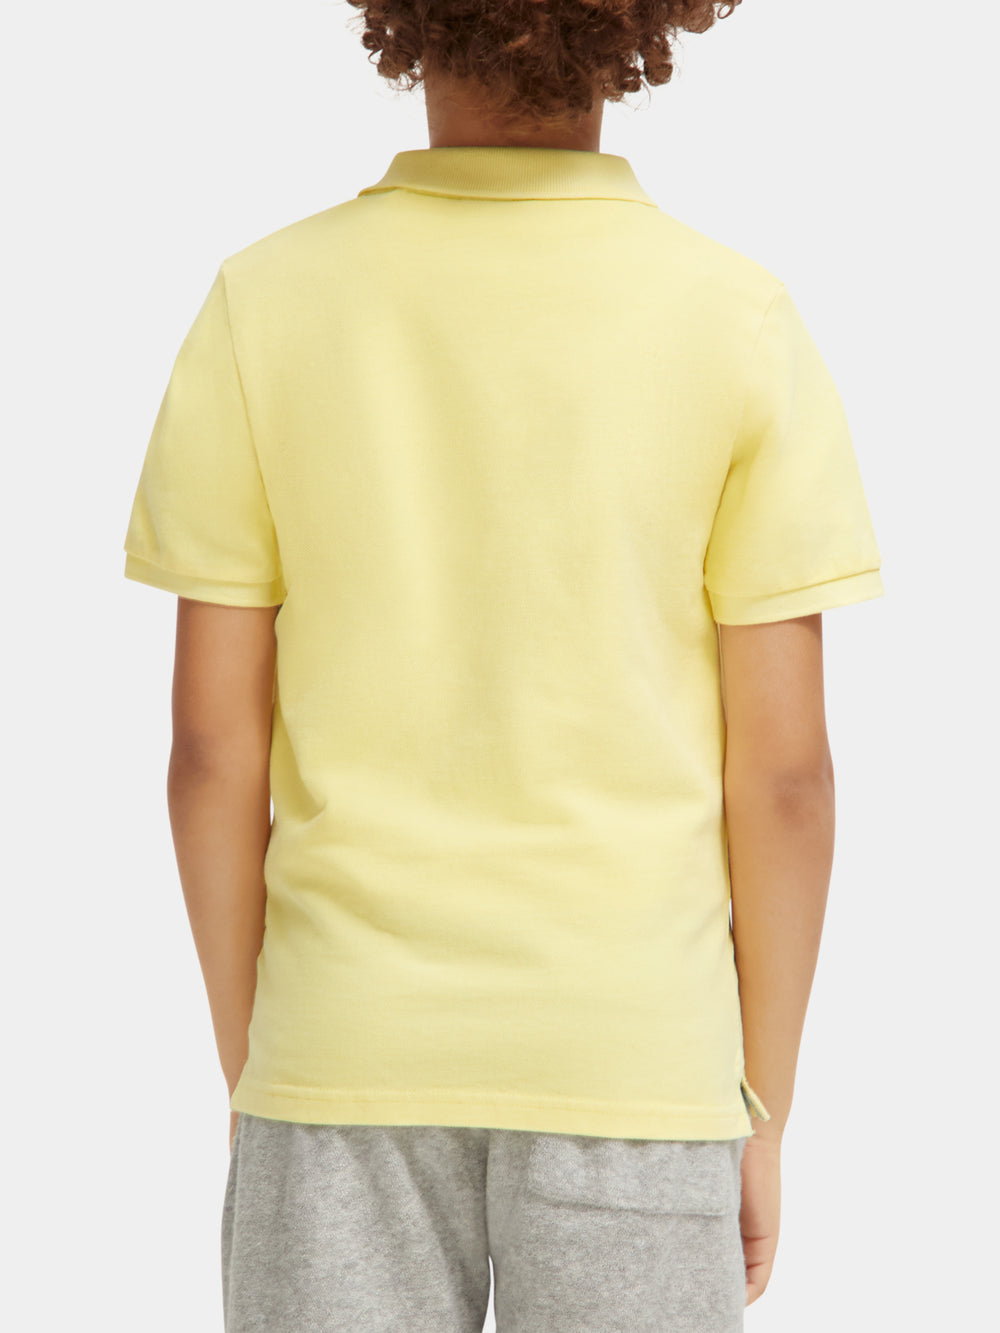 Garment-dyed pique polo shirt - Scotch & Soda AU